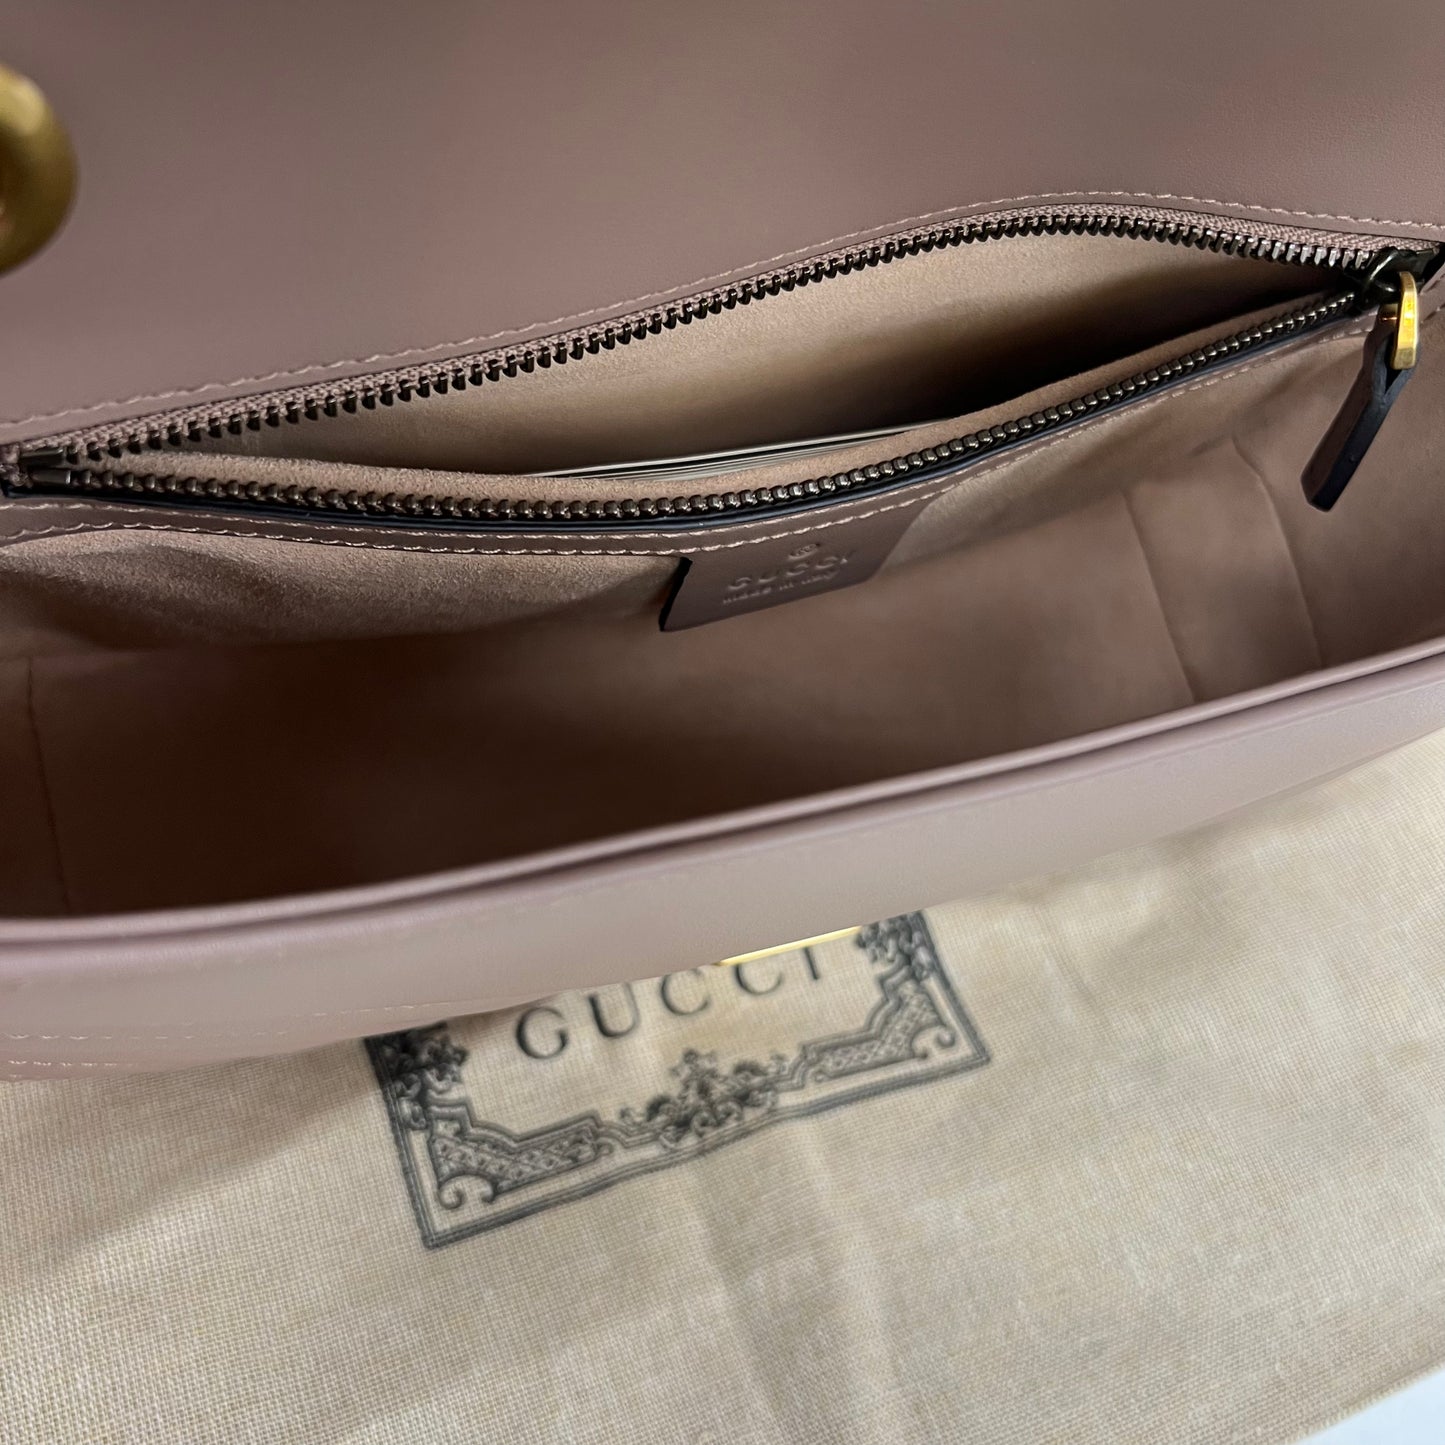 Gucci Marmont Matelasse Small Flap Bag